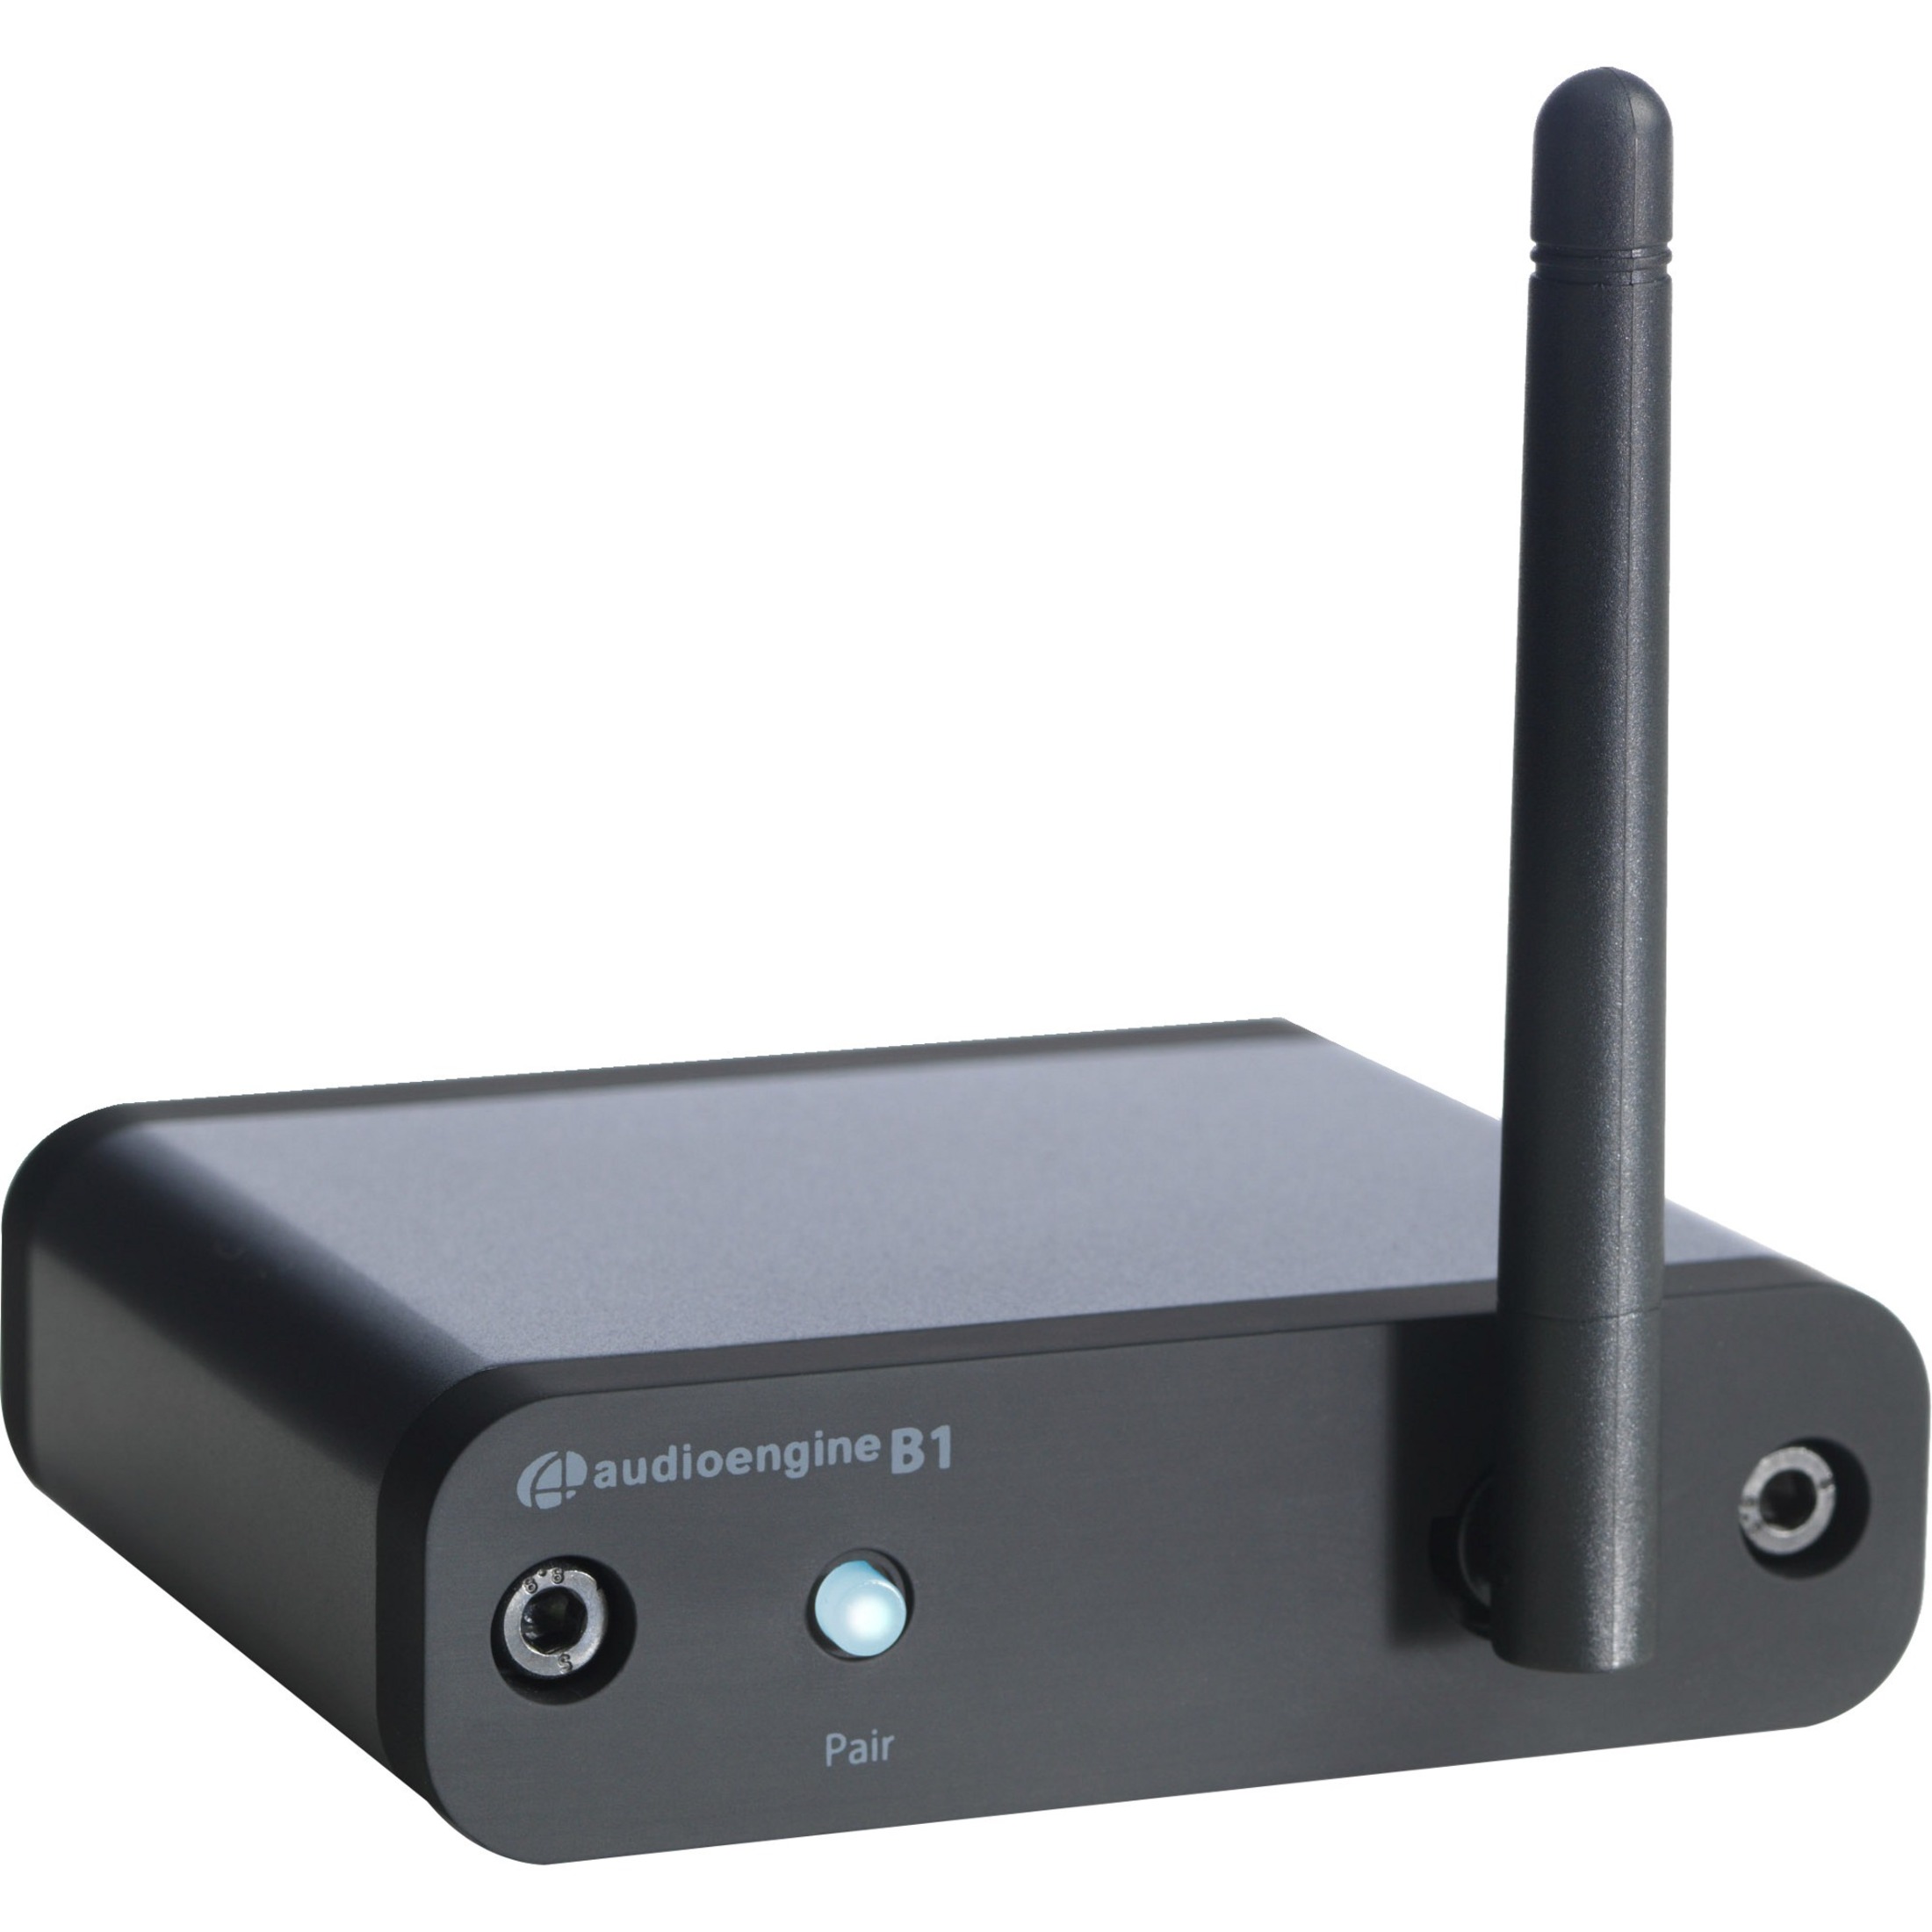 Audioengine B1 24 Bit Wireless Bluetooth Receiver aptX HD - New - image 1 of 6